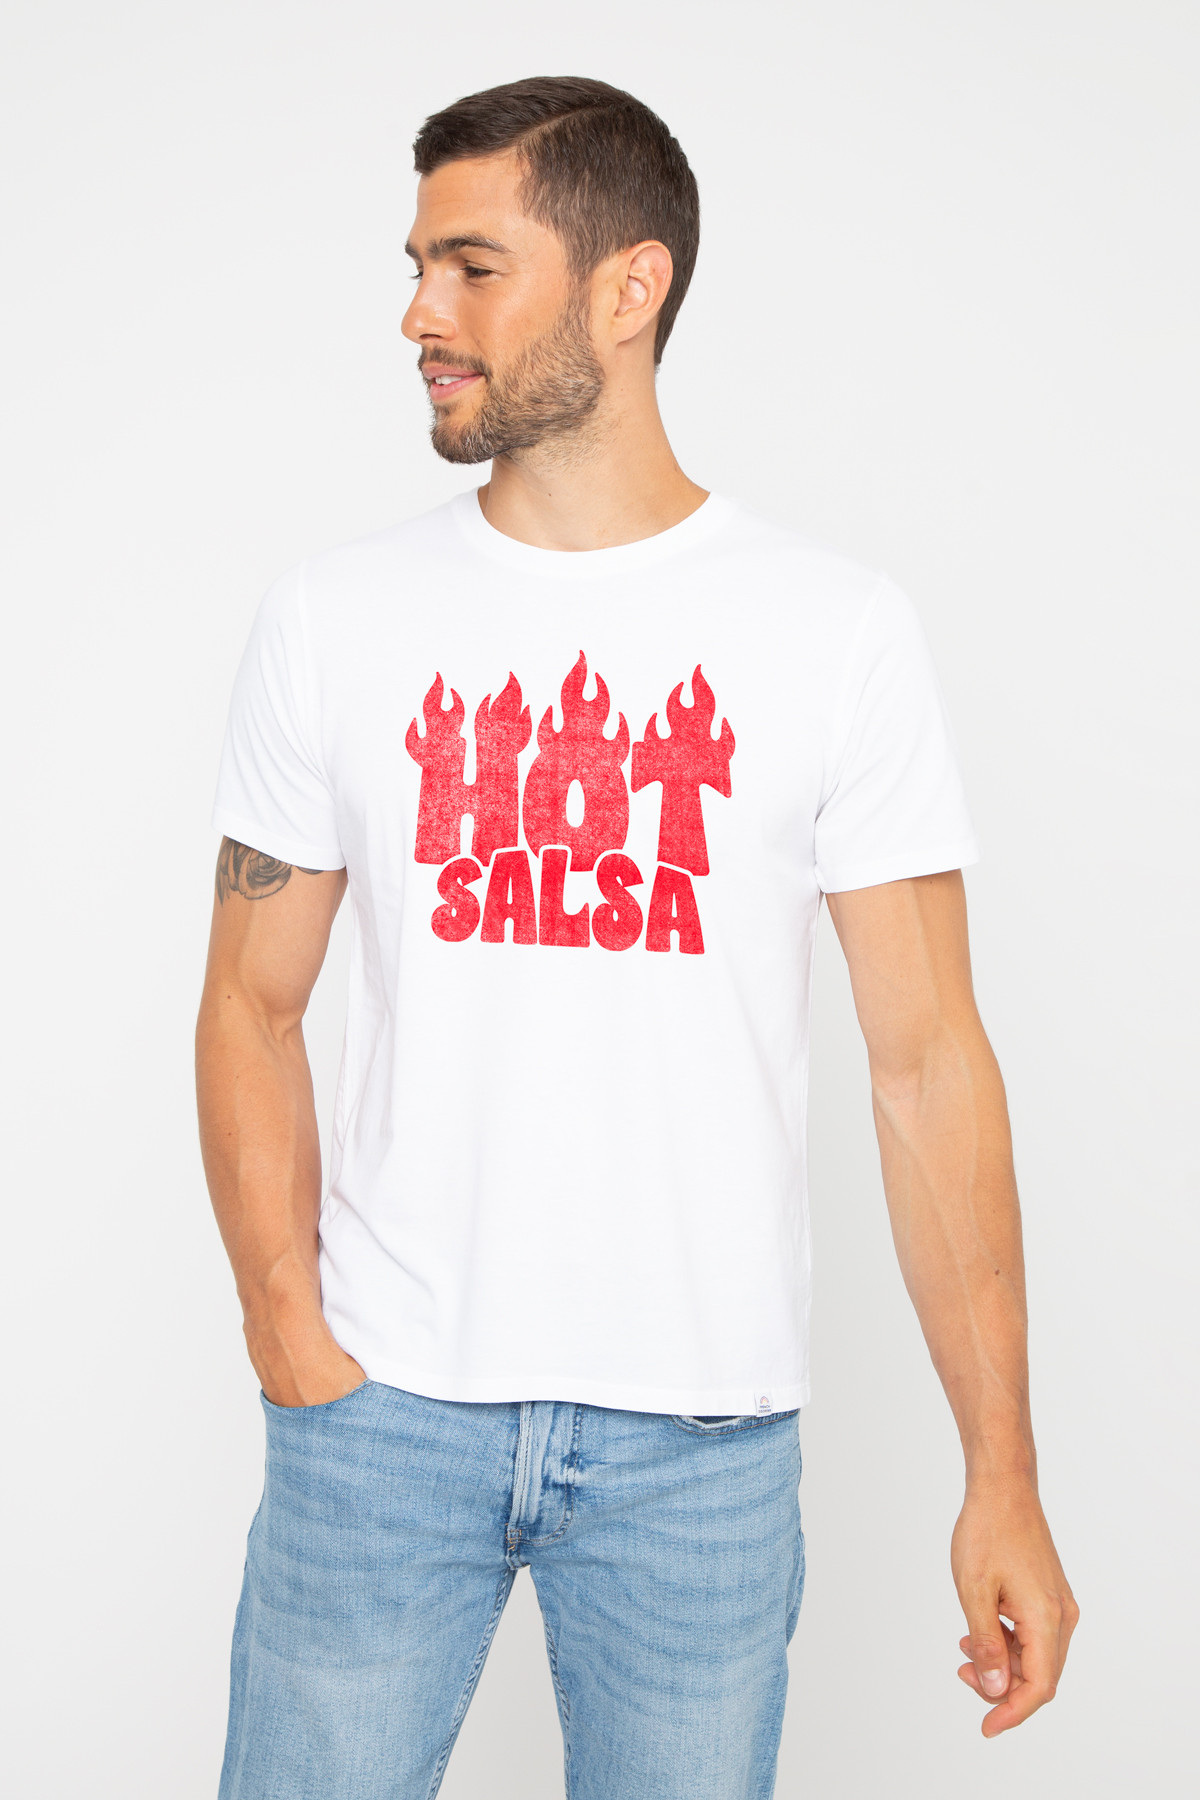 Tshirt Alex HOT SALSA (Print) (M)